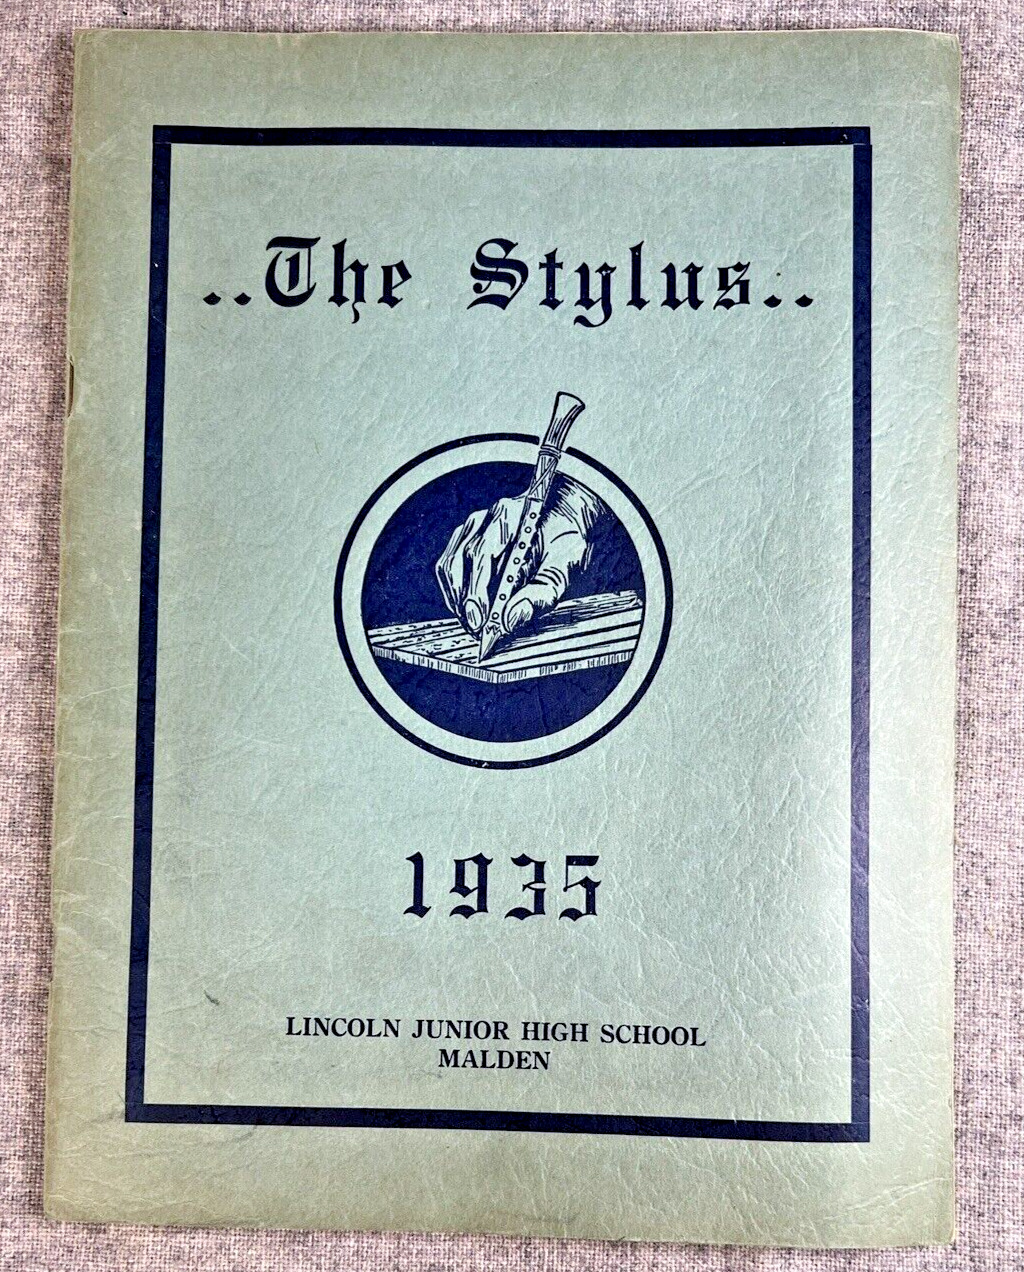 1935 Lincoln Junior High School Yearbook, Malden MA Massachusetts, The Stylus